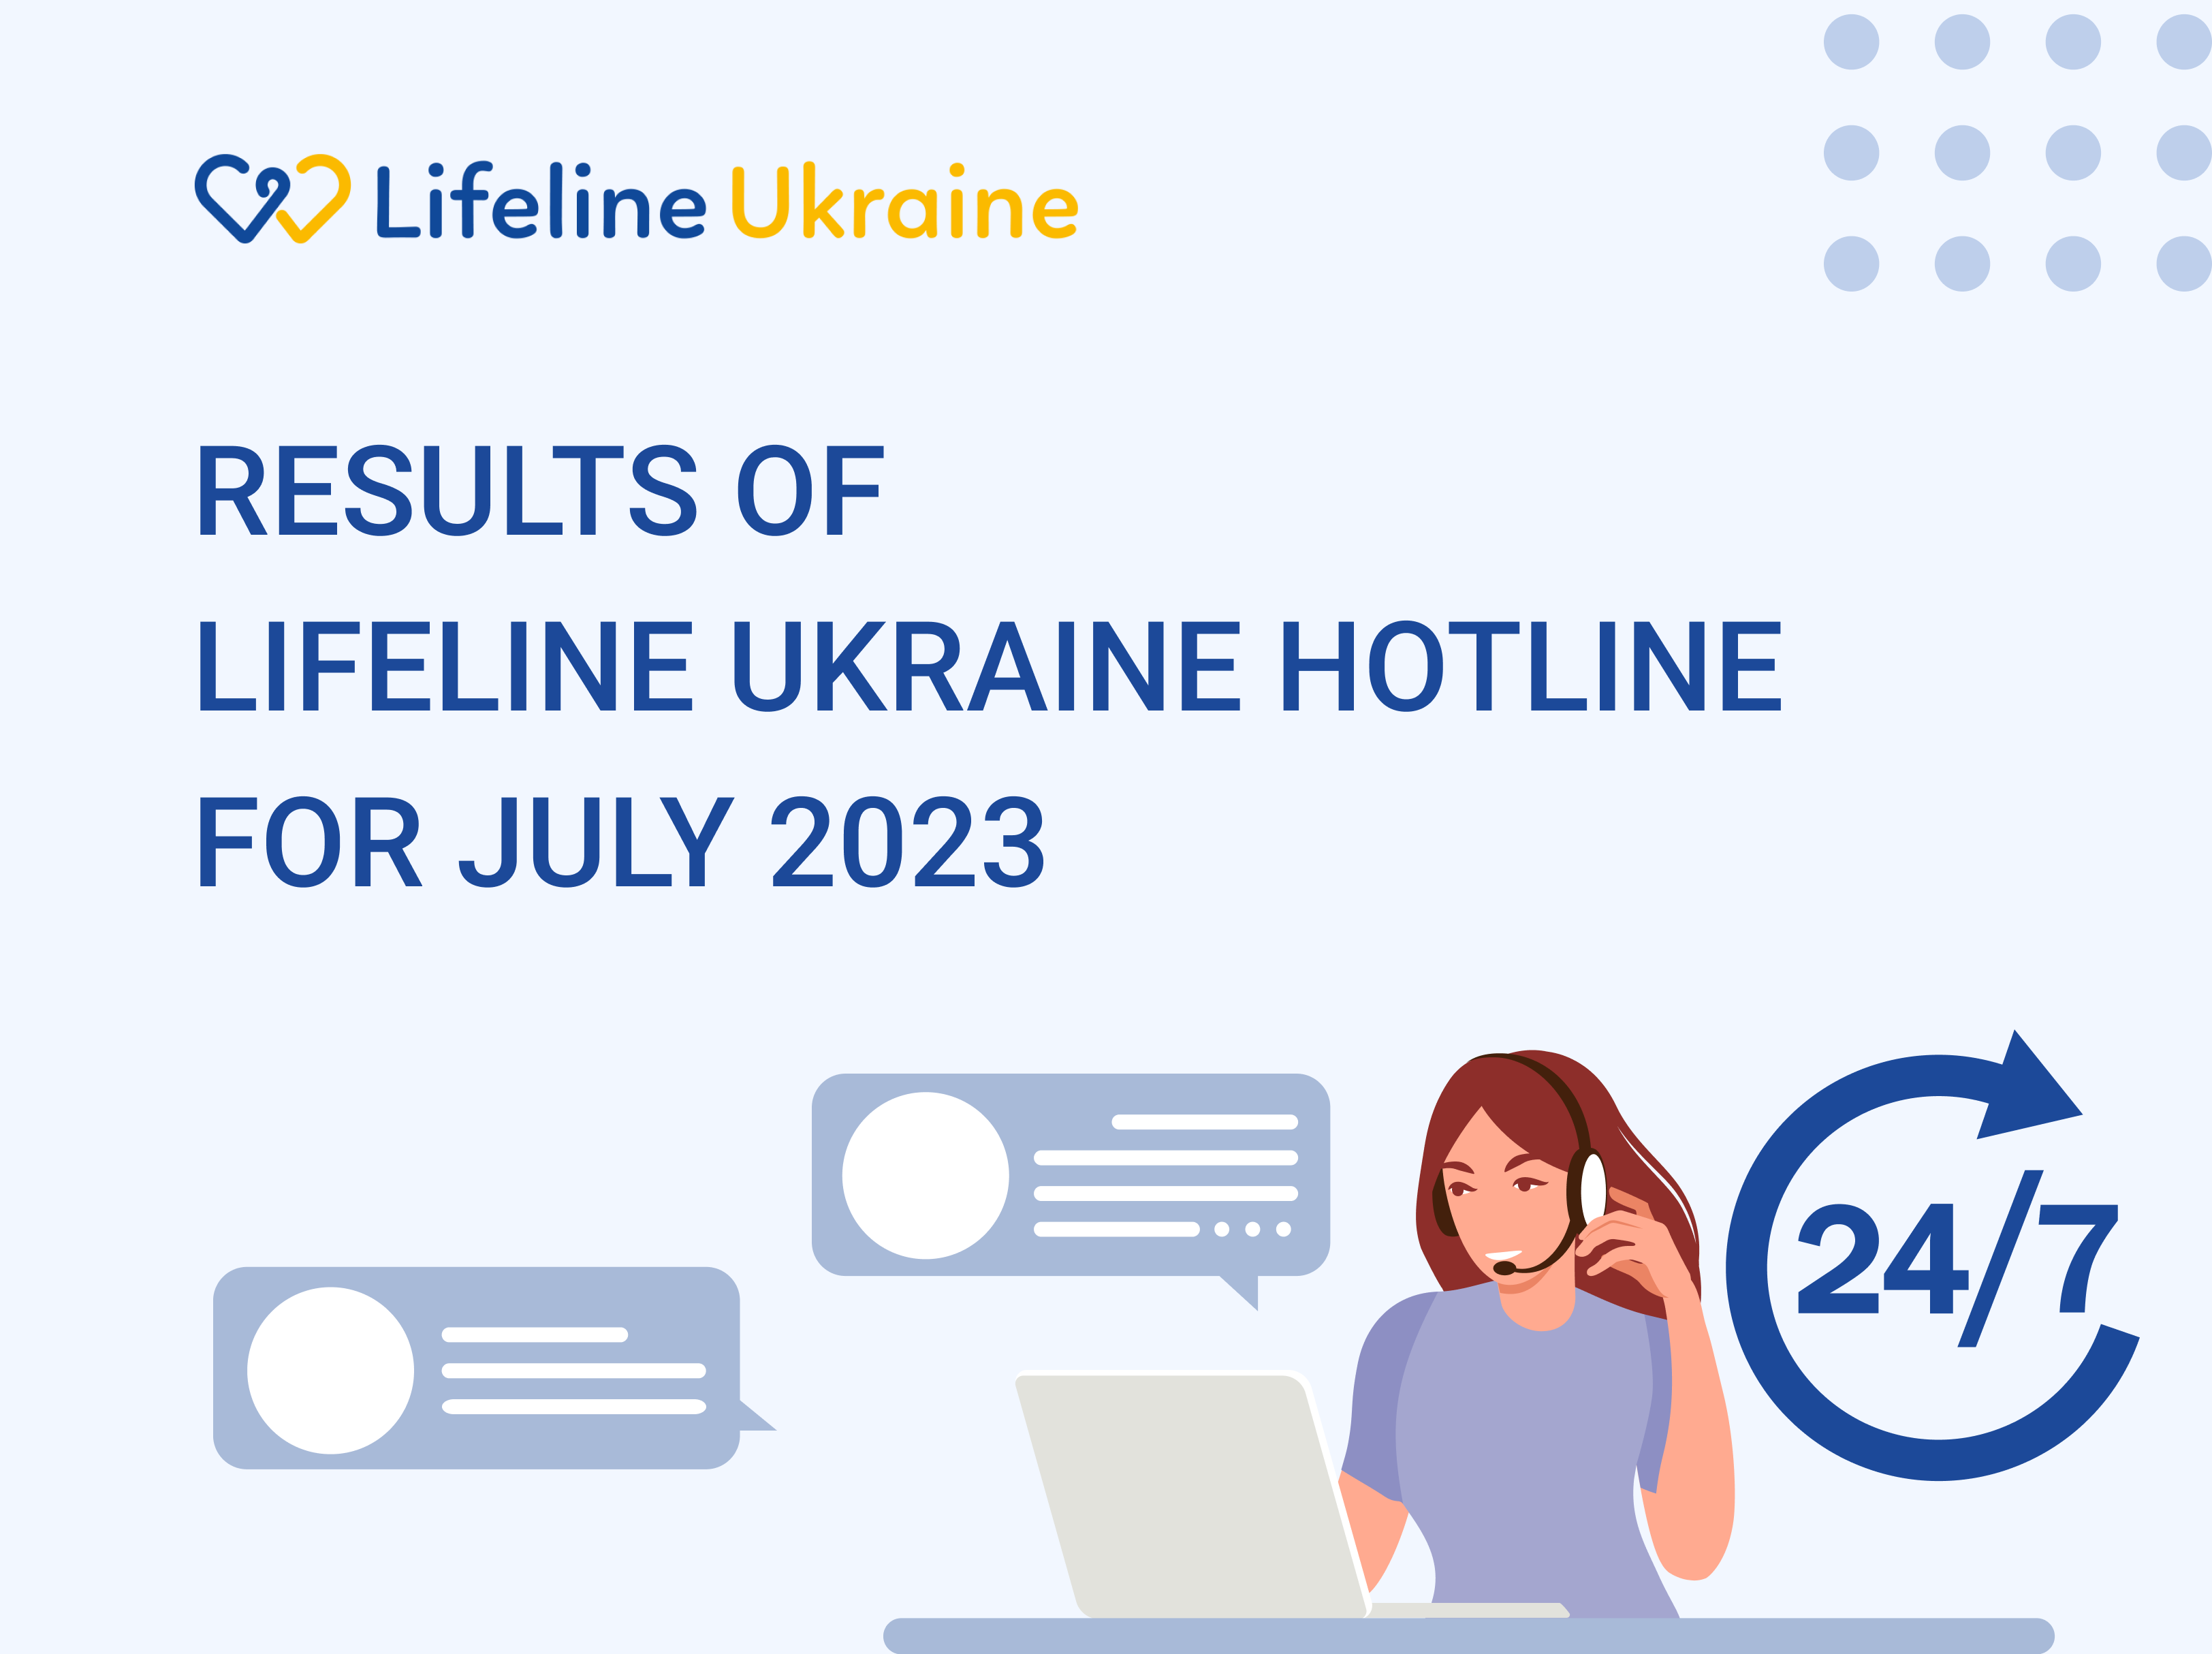 A woman takes calls on the line LifeLine Ukraine